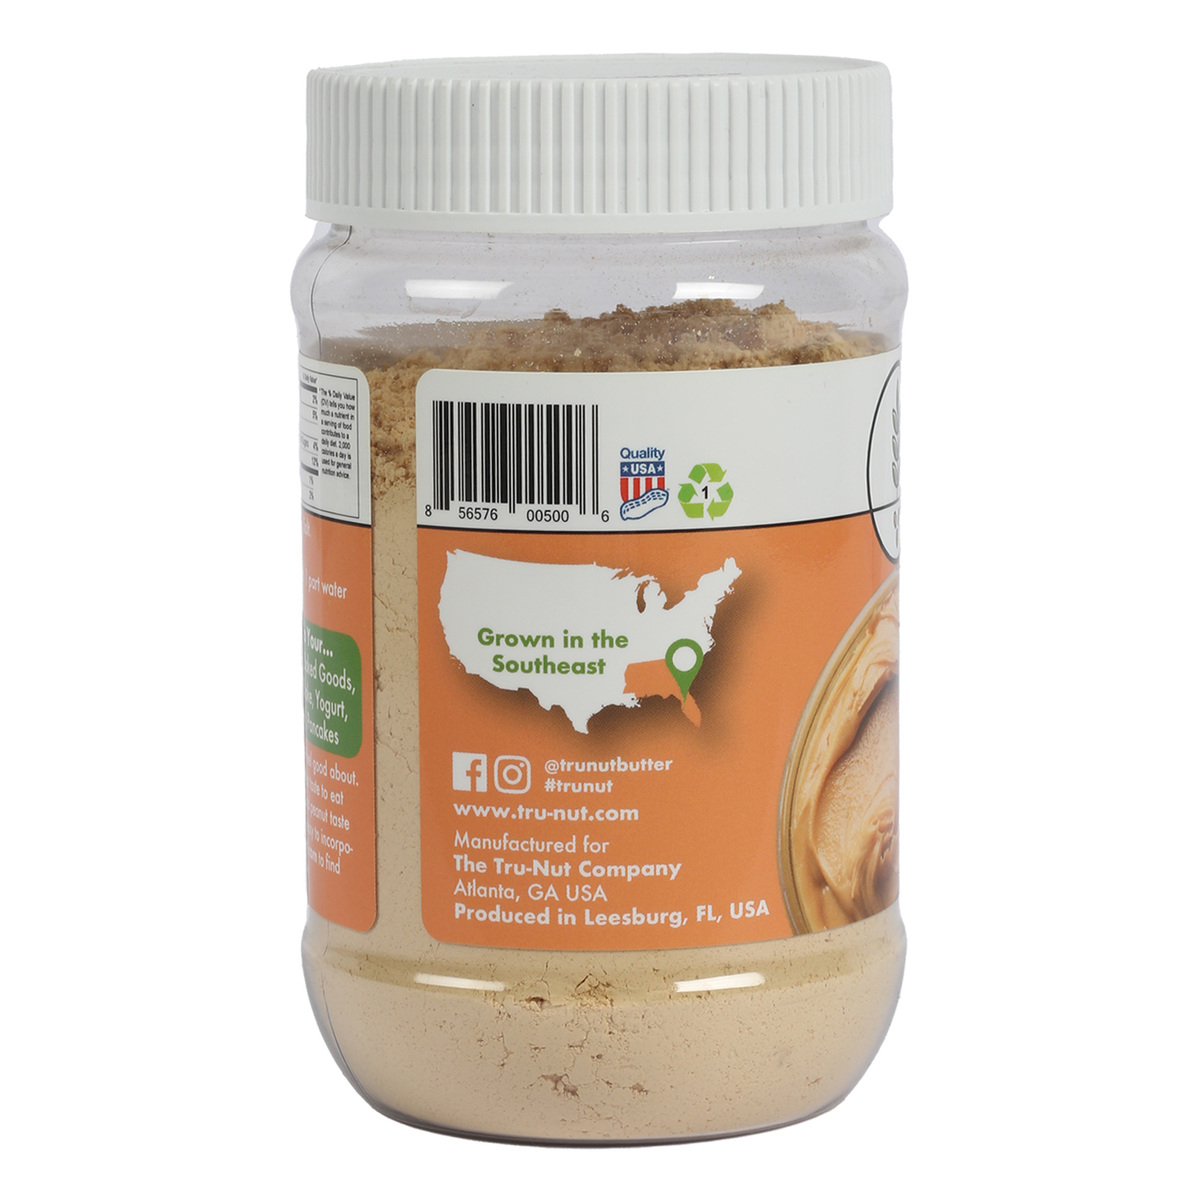 Tru Nut Powdered Peanut Butter Original Flavour, 190 g